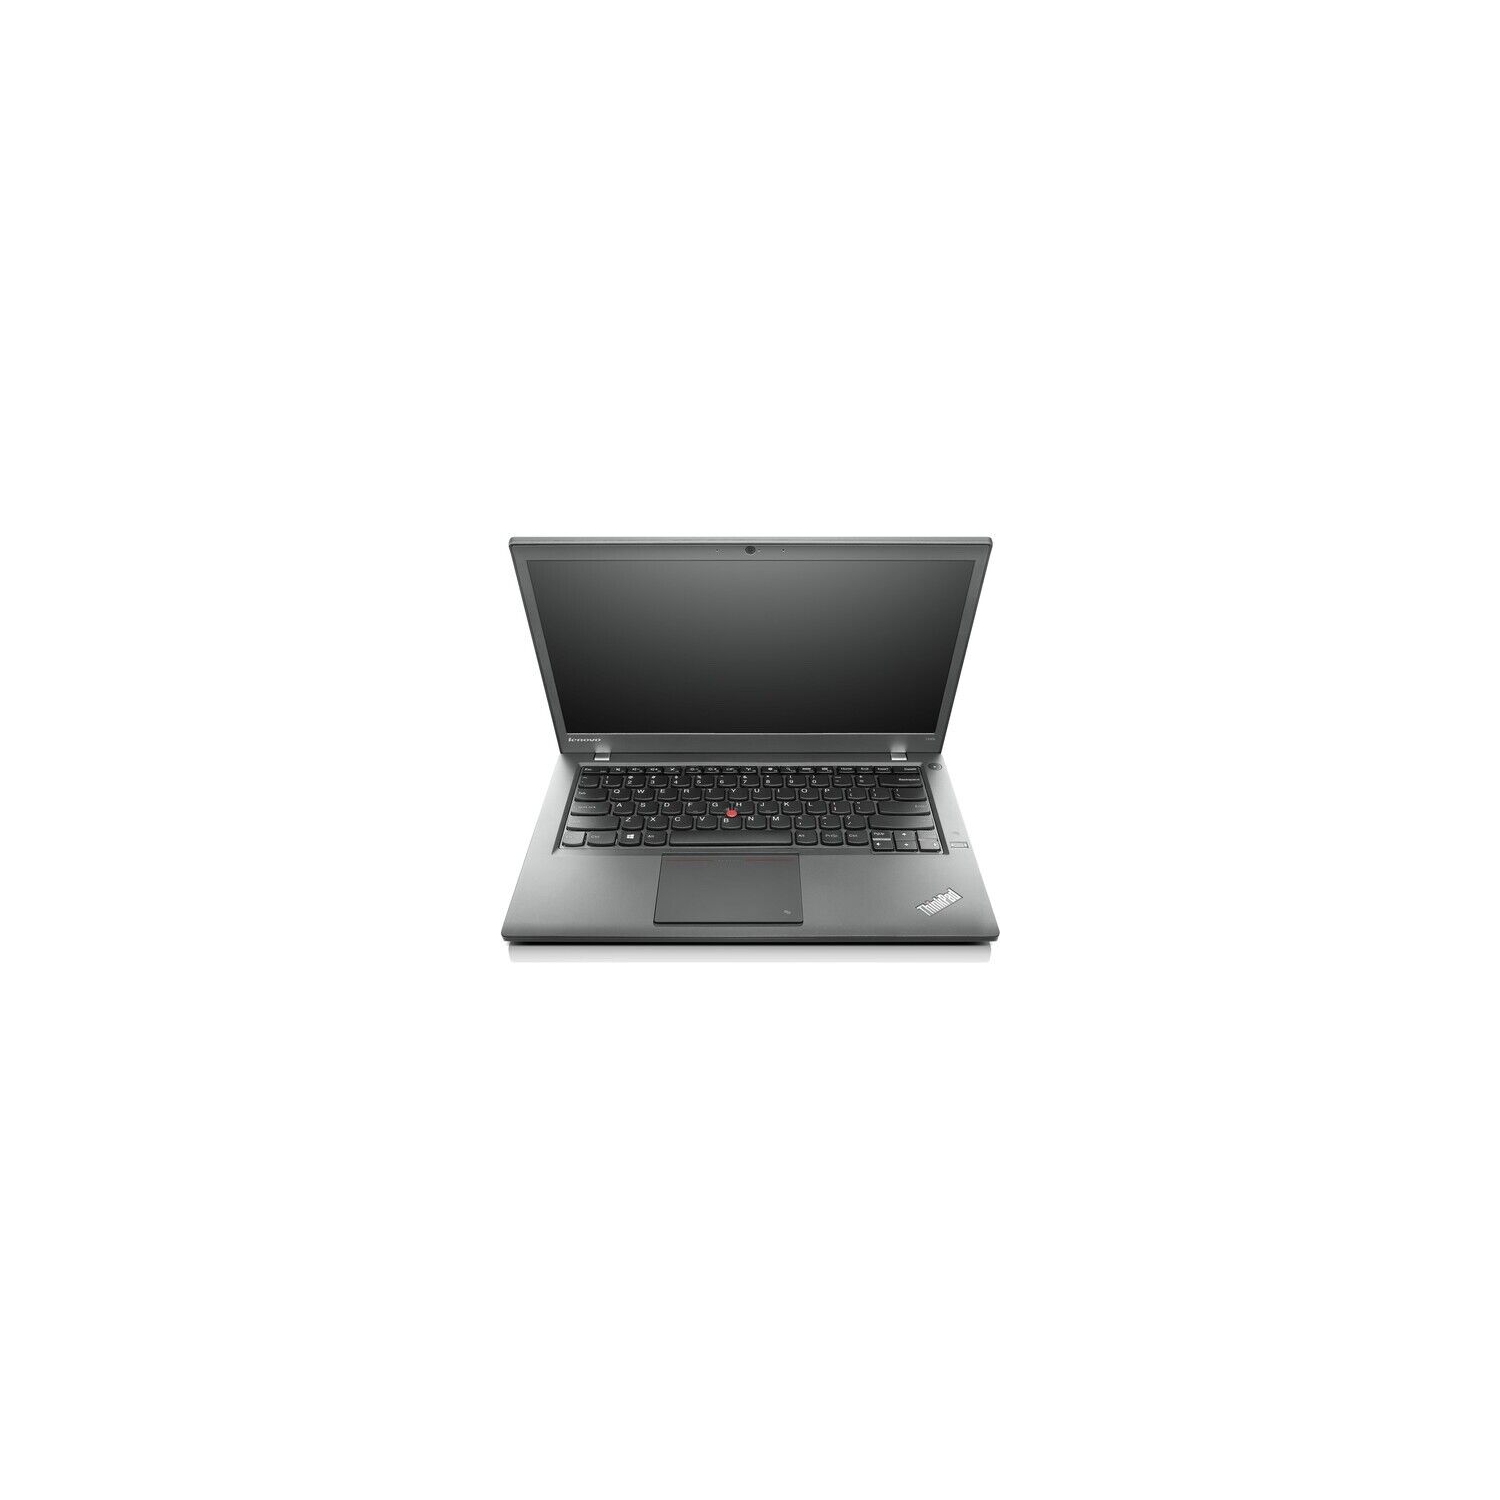 Refurbished (Good) - Lenovo ThinkPad T440 - 14"Laptop- Intel Core i7-4600U - 2.10GHz - 12 GB RAM - 256 GB SSD - Windows 10 Pro(Grade A)